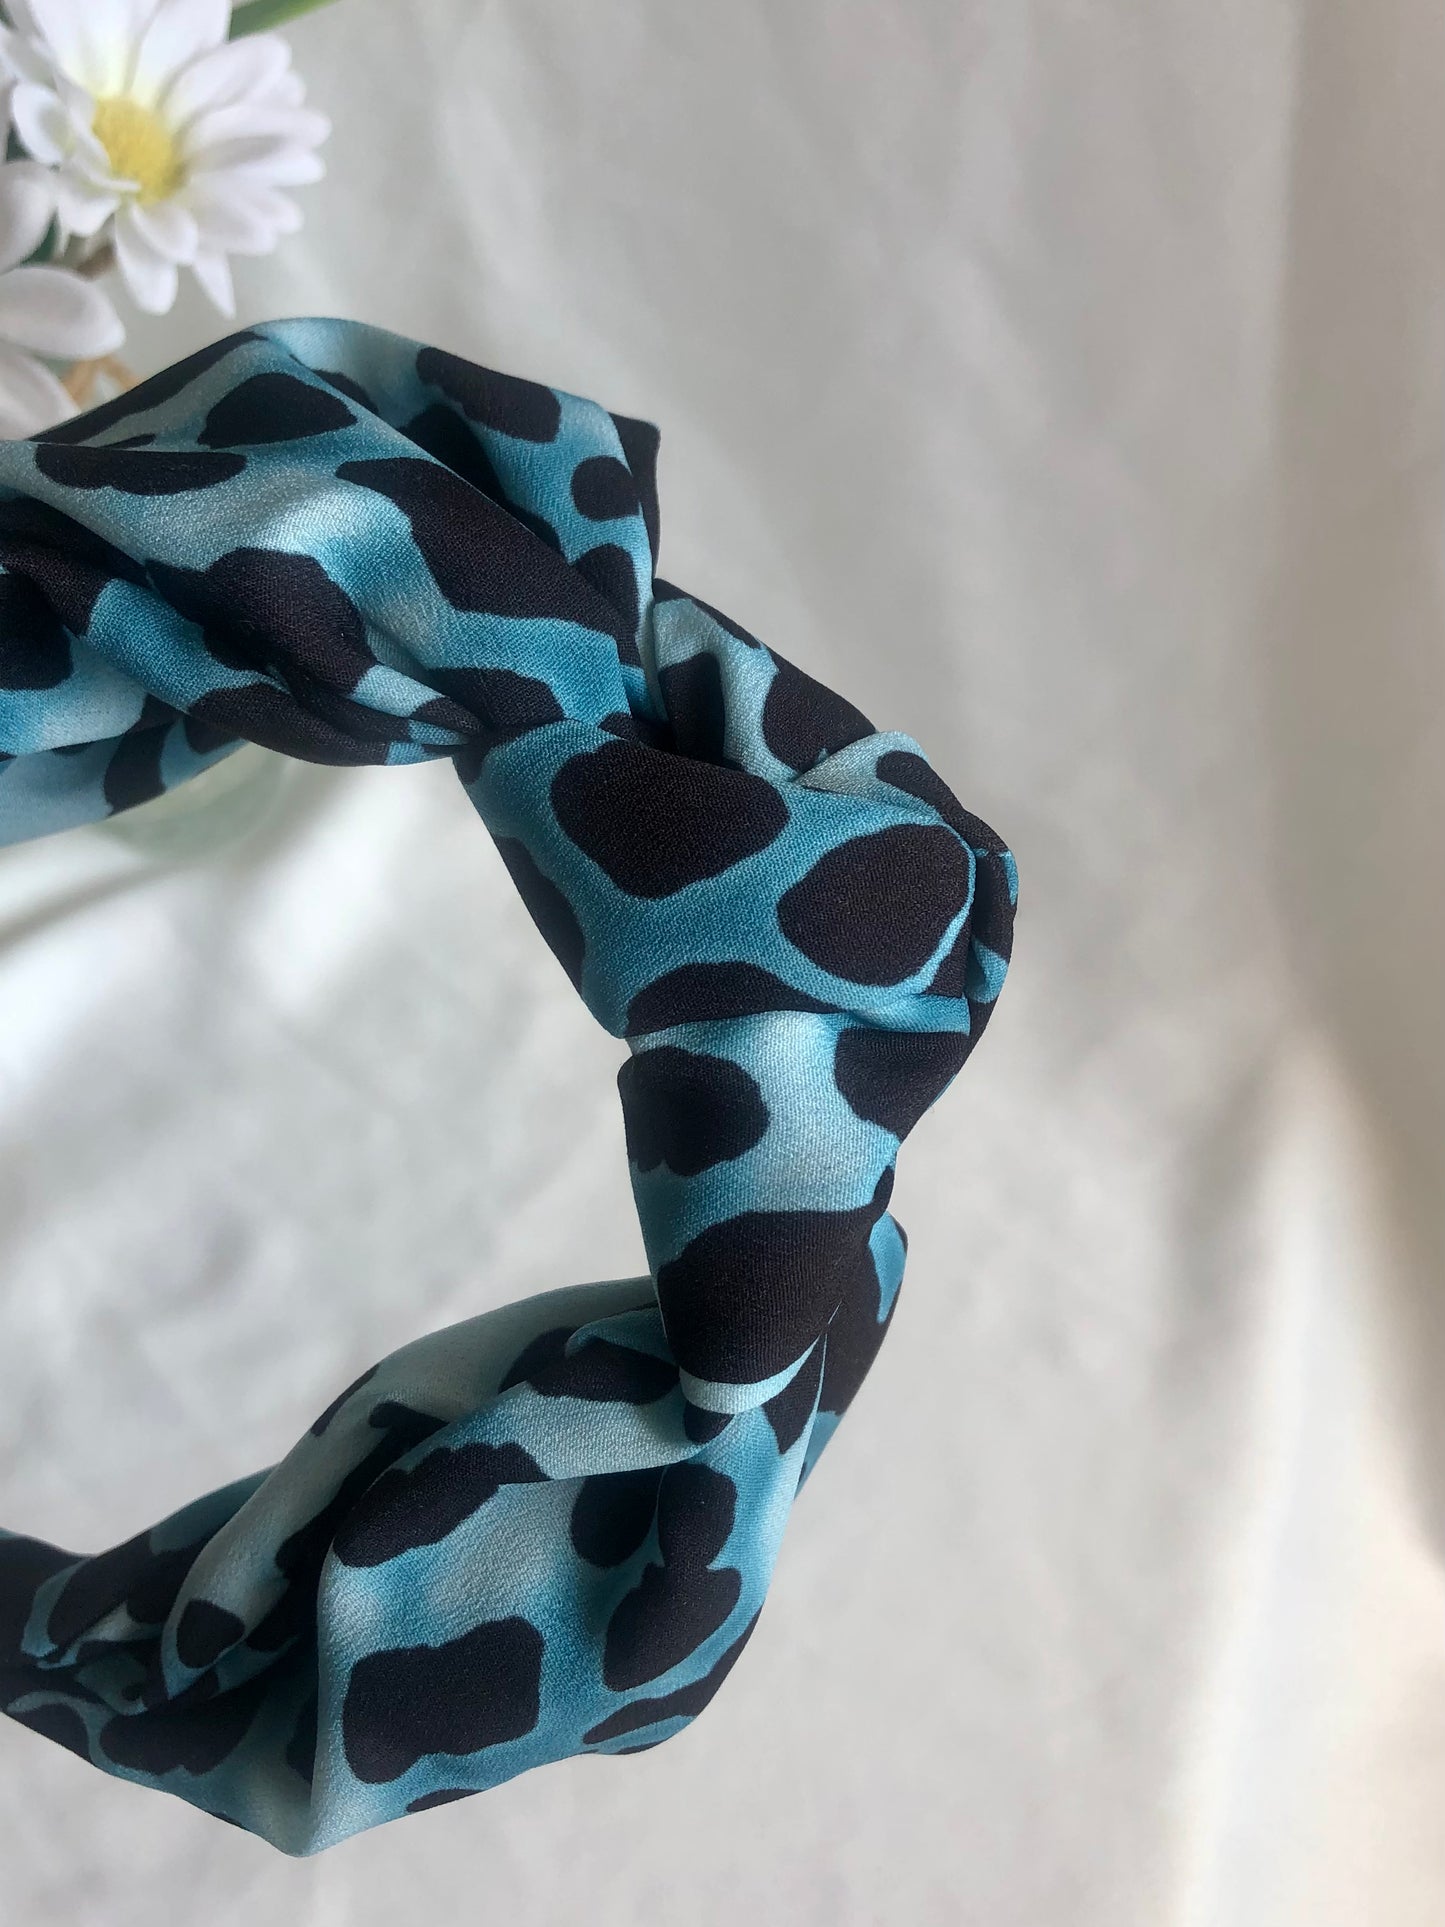 Sapphire blue leopard print headband - choose style